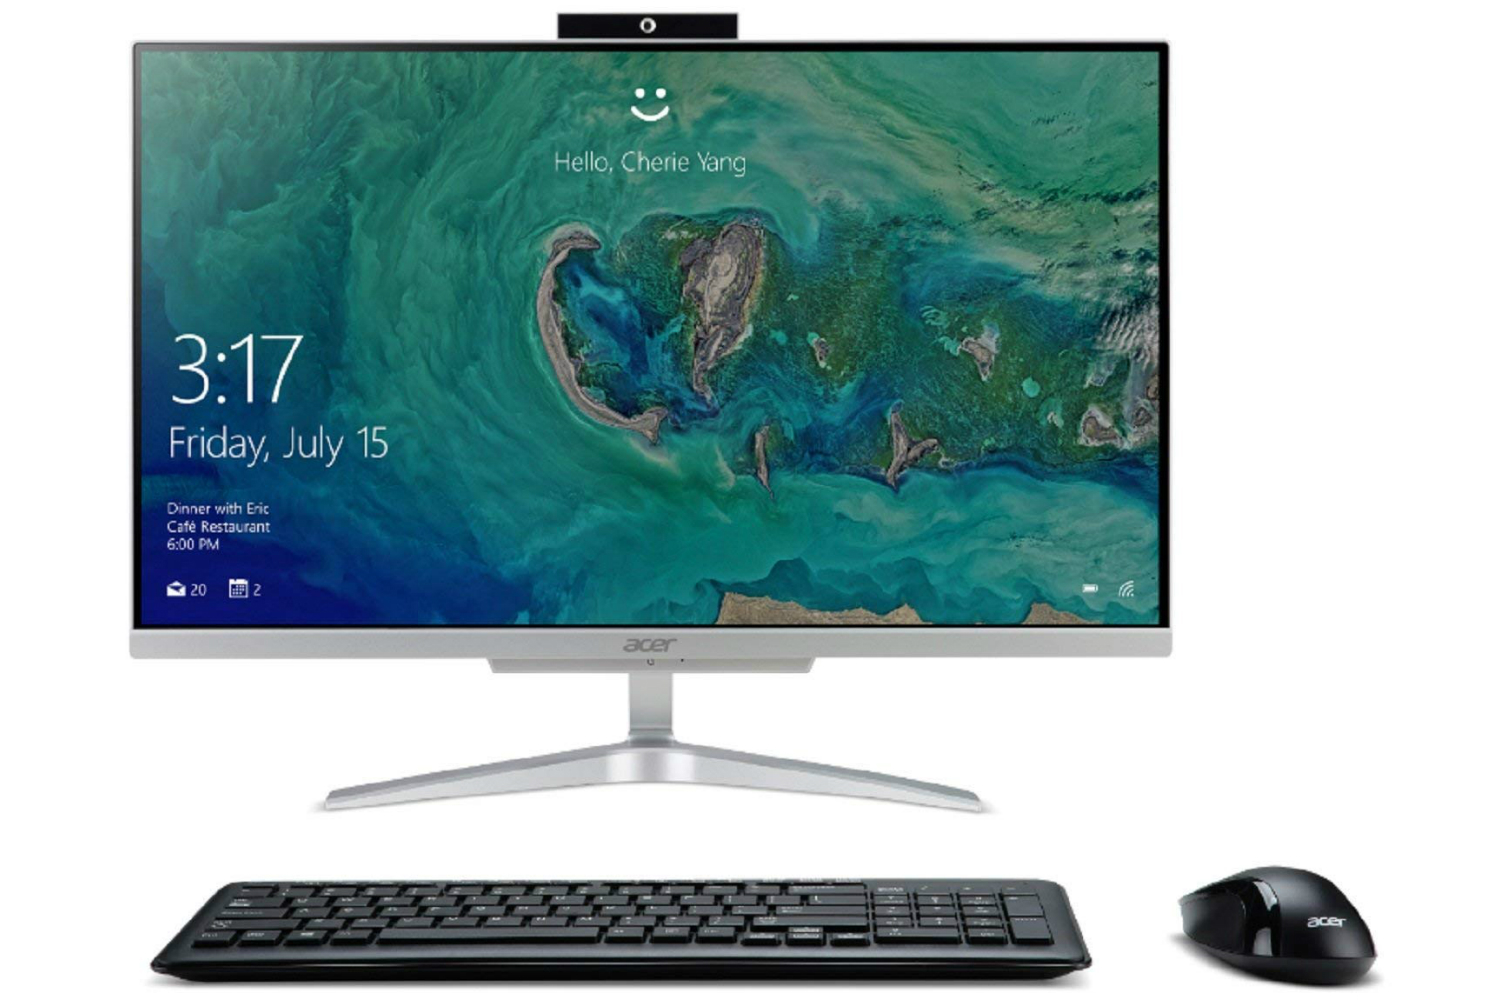 amazon slashes prices on acer laptops desktops monitors and gaming gear aspire c24 865 ur12 aio desktop